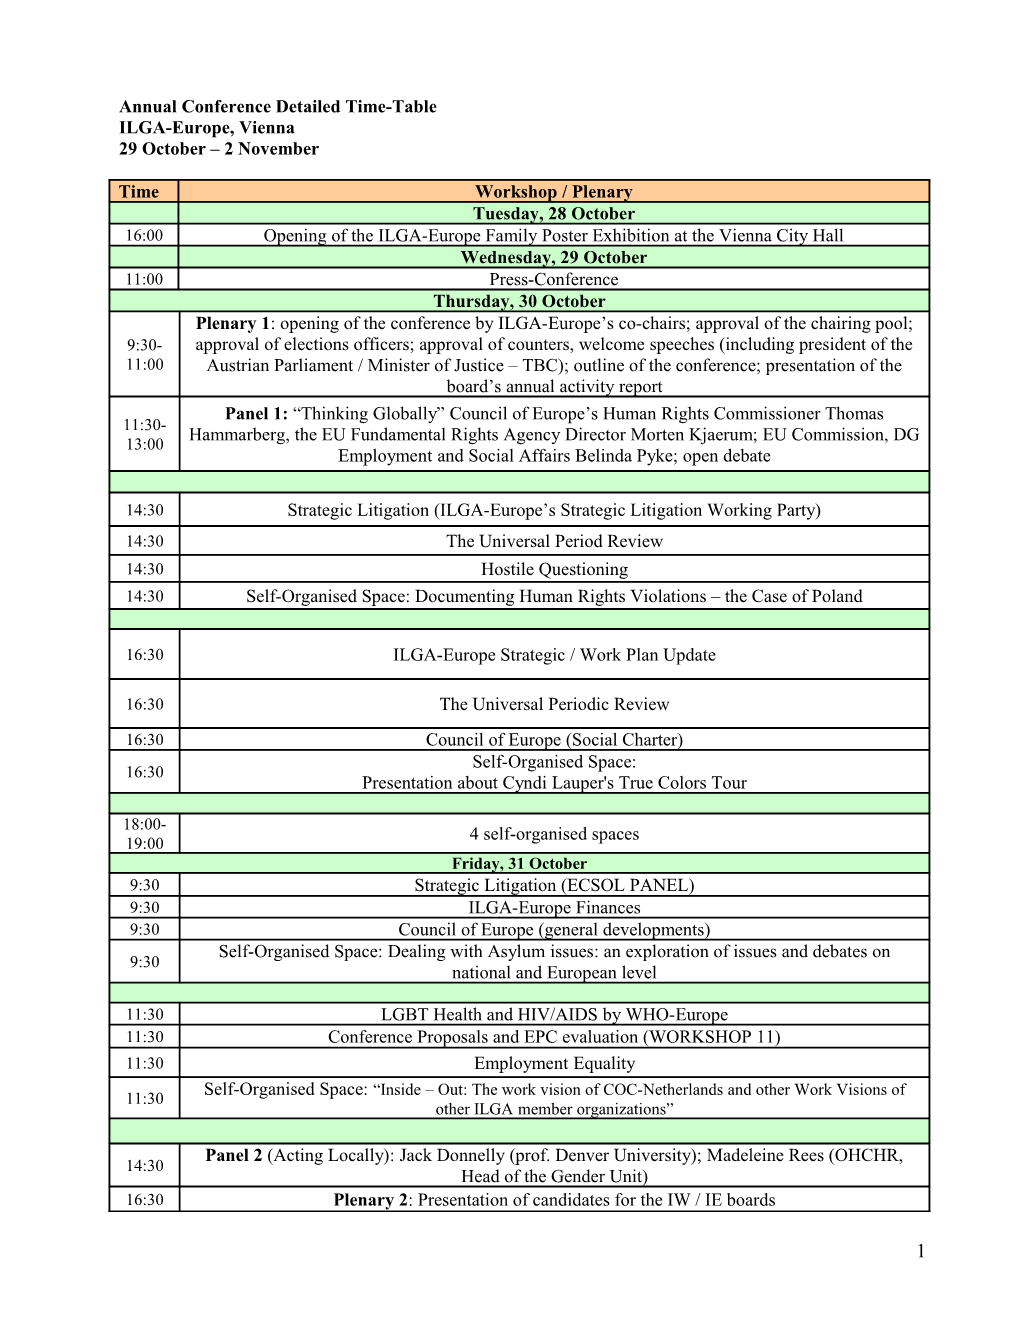 Annual Conference Workshop Programme